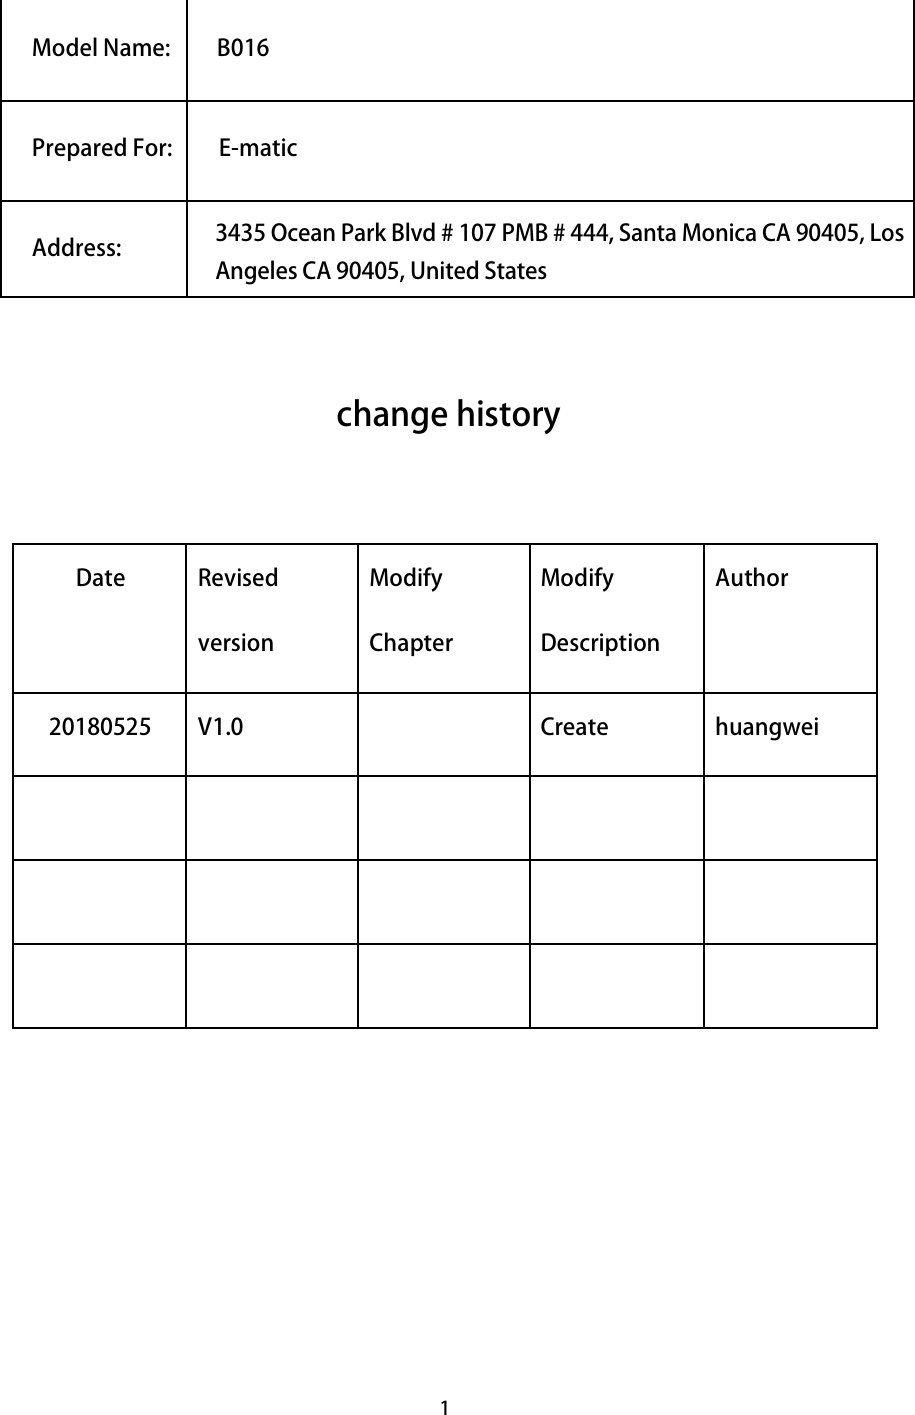 1 change history   Date  Revised version Modify Chapter Modify Description Author 20180525  V1.0     Create  huangwei                              Model Name:         B016Prepared For:         E-maticAddress: 3435 Ocean Park Blvd # 107 PMB # 444, Santa Monica CA 90405, LosAngeles CA 90405, United States